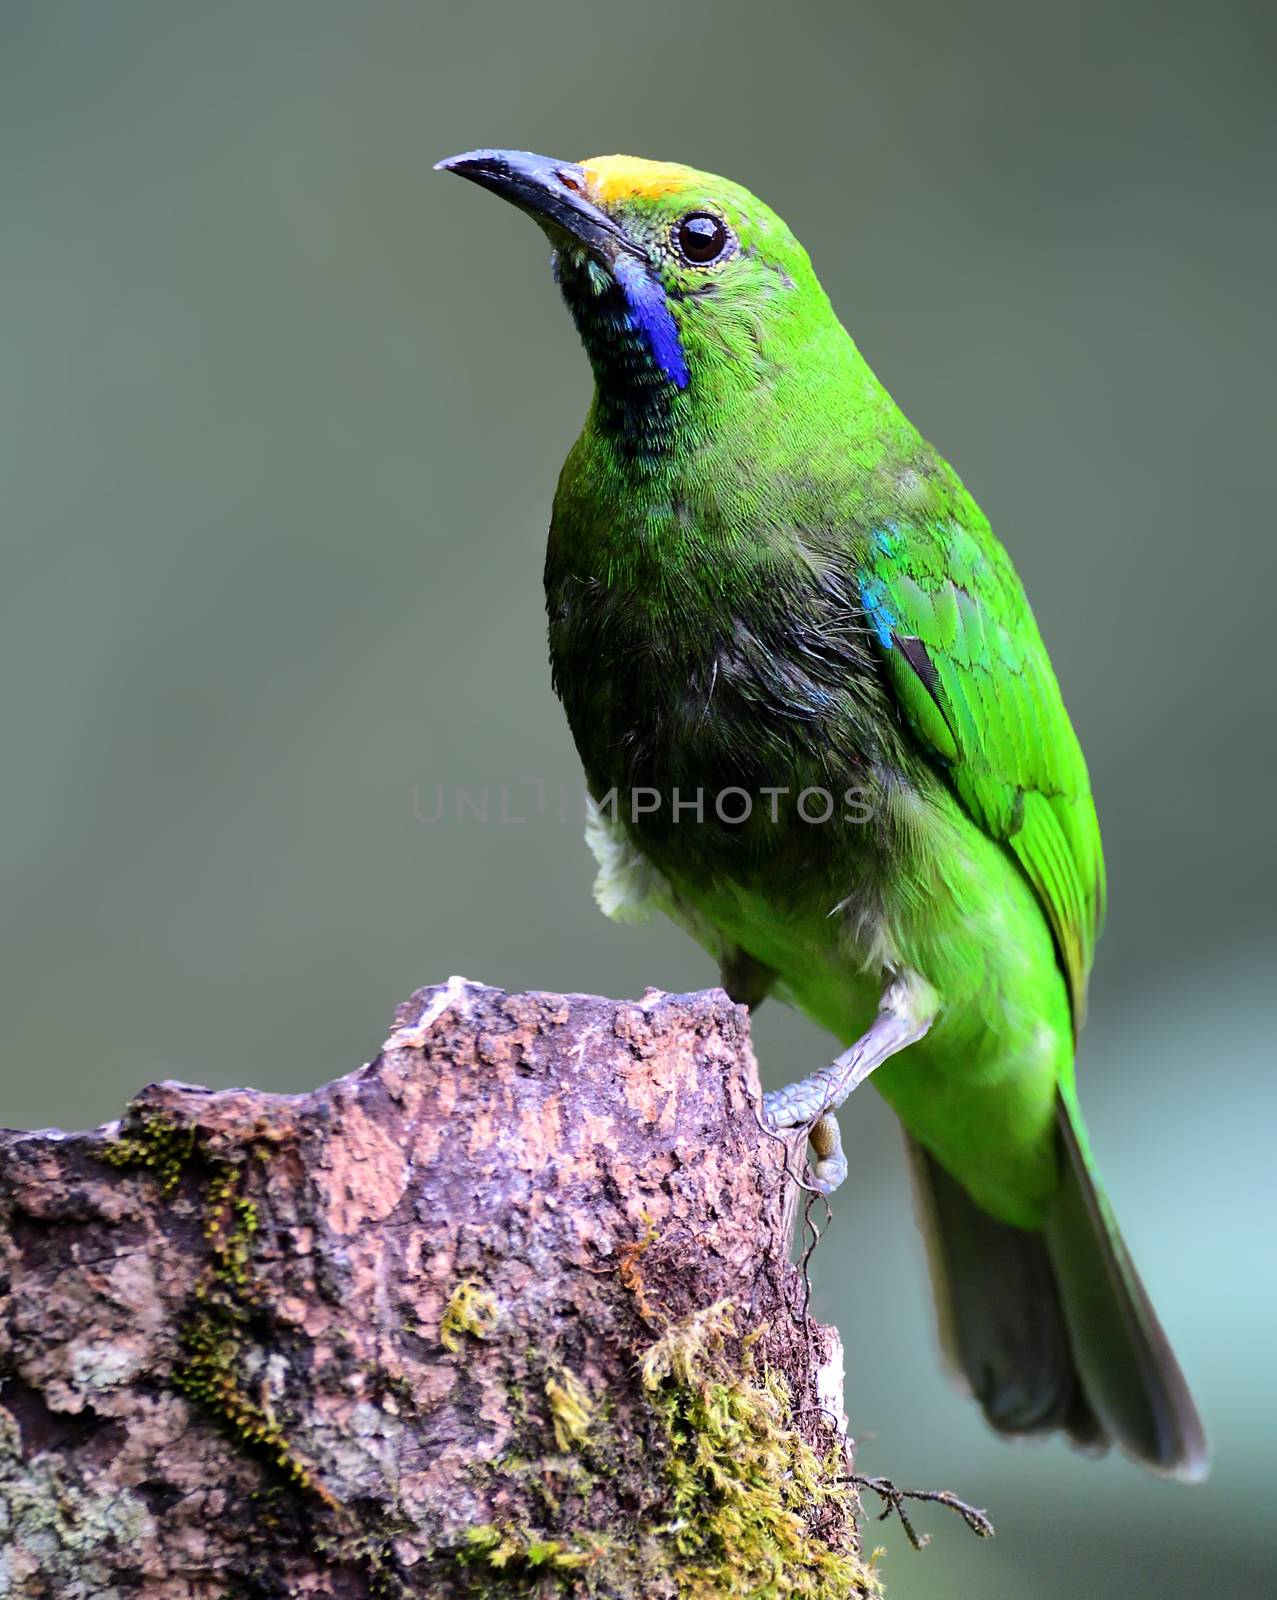 Golden-fronted leafbird by rkbalaji